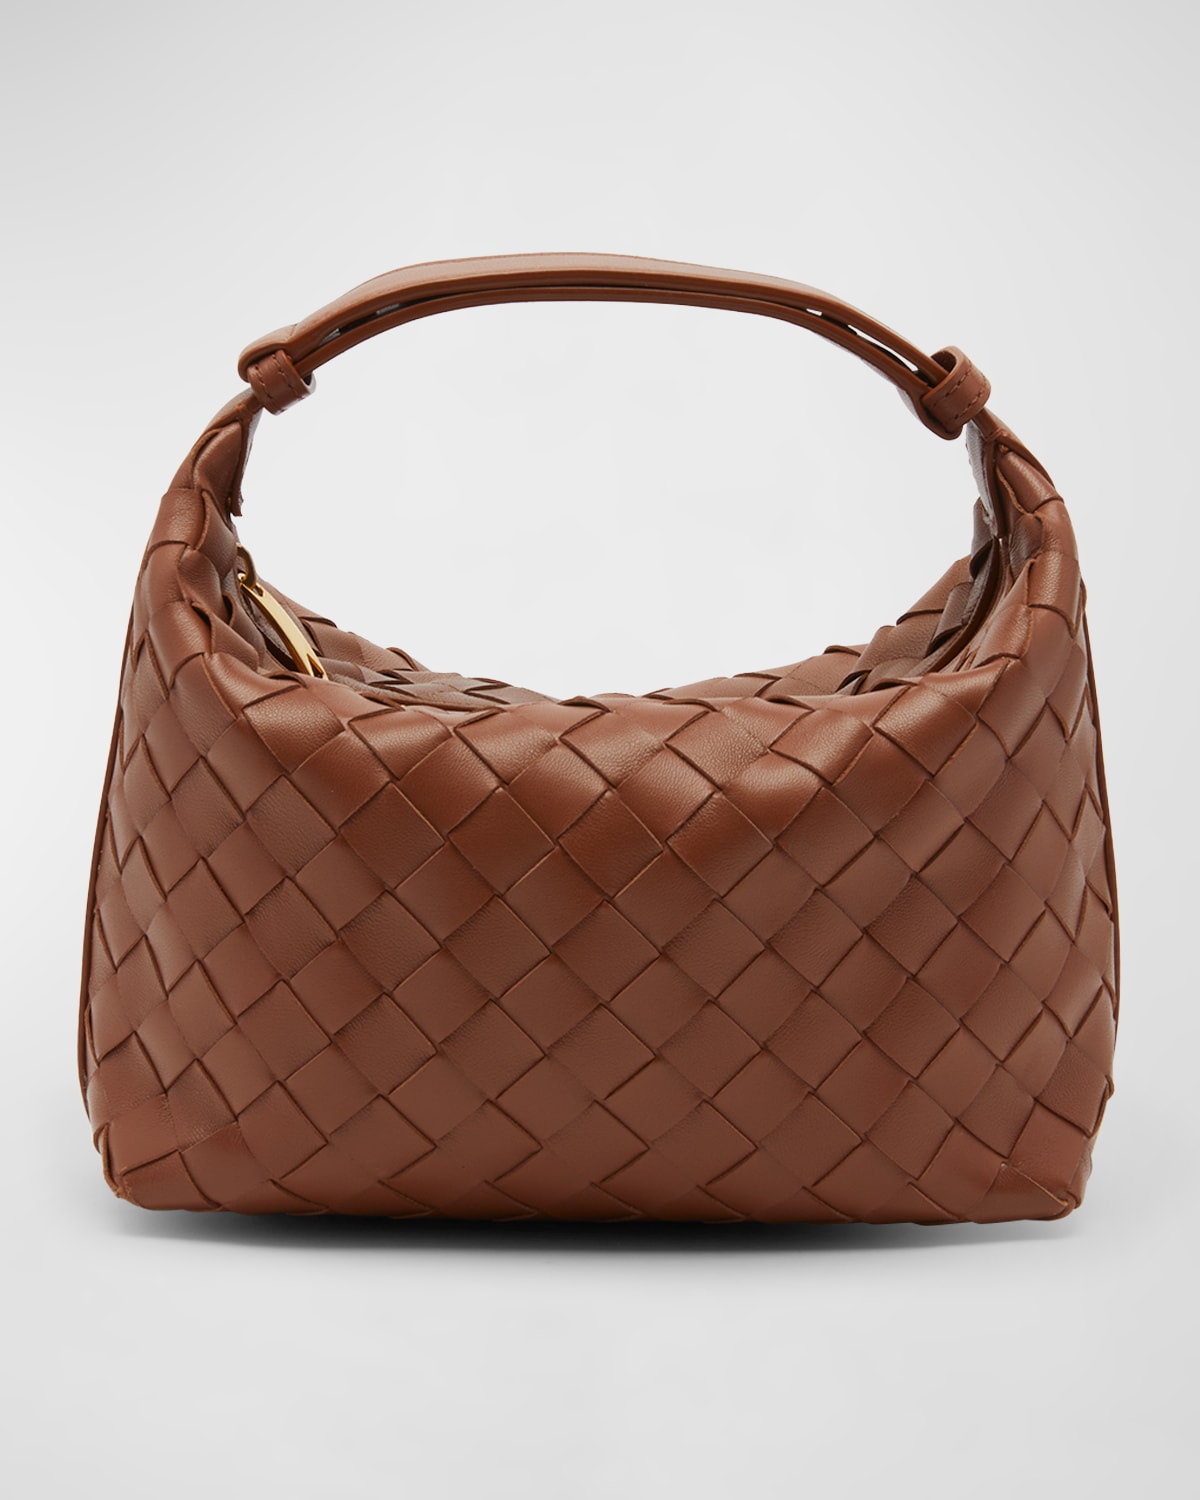 Bottega Veneta Women's Small Wallace Leather Top-Handle Bag - Wood